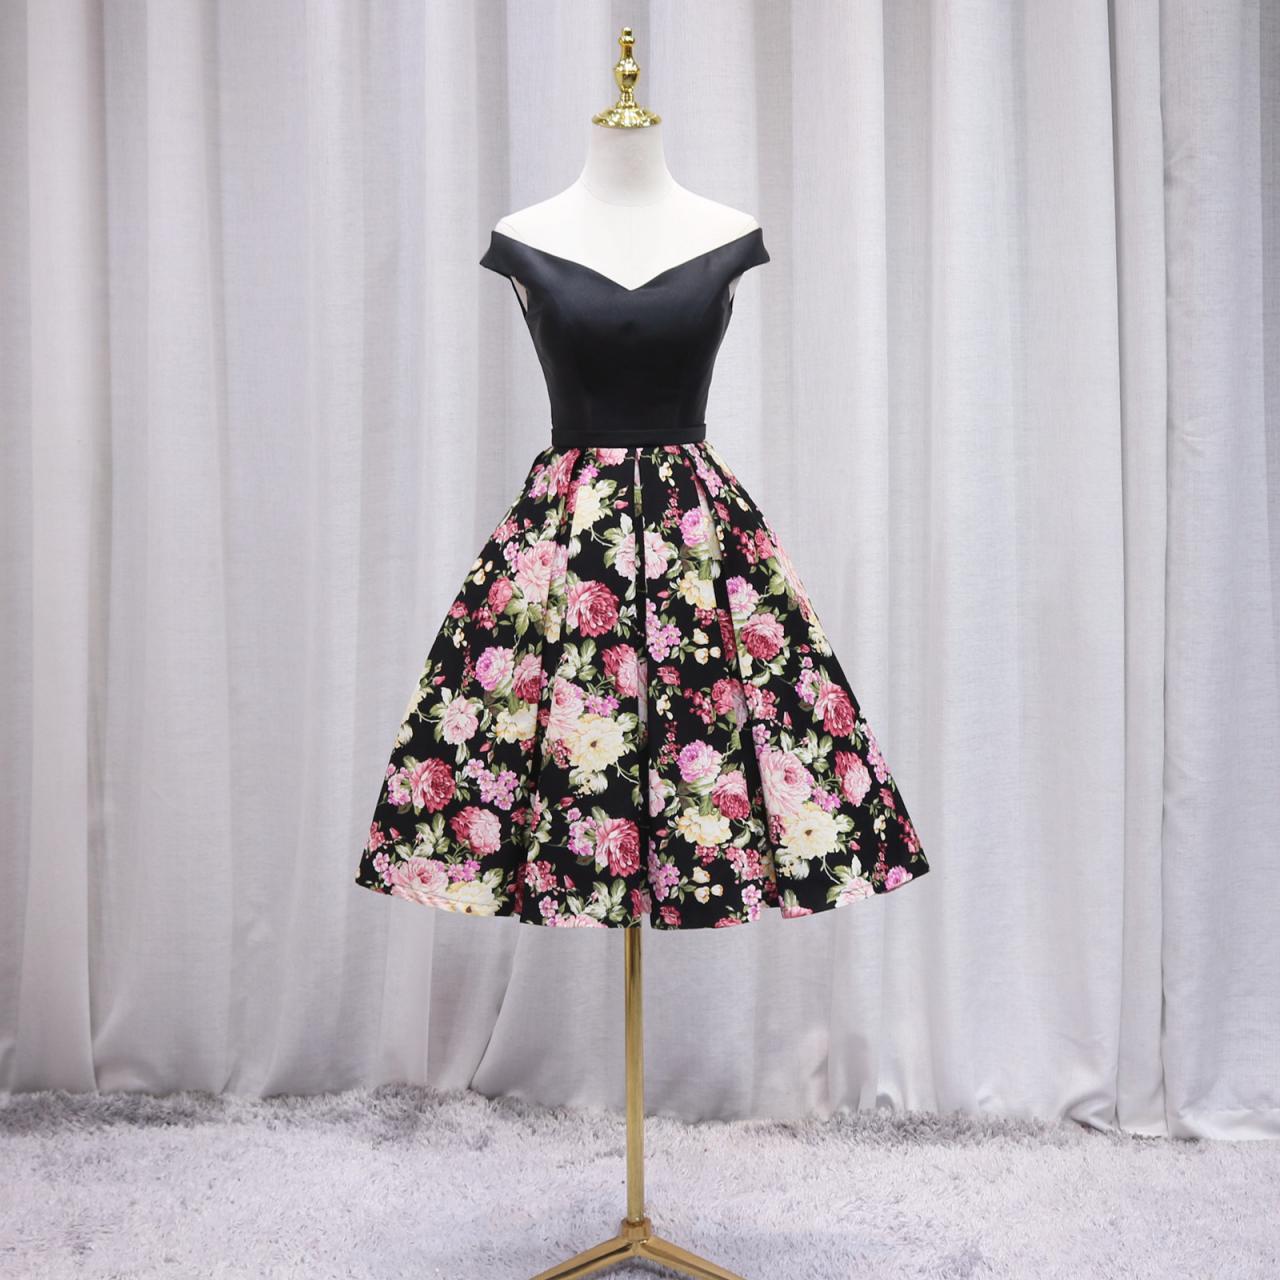 Black Satin And Floral Off Shoulder Party Dress, Black Short Homecoming Dress Prom Dress